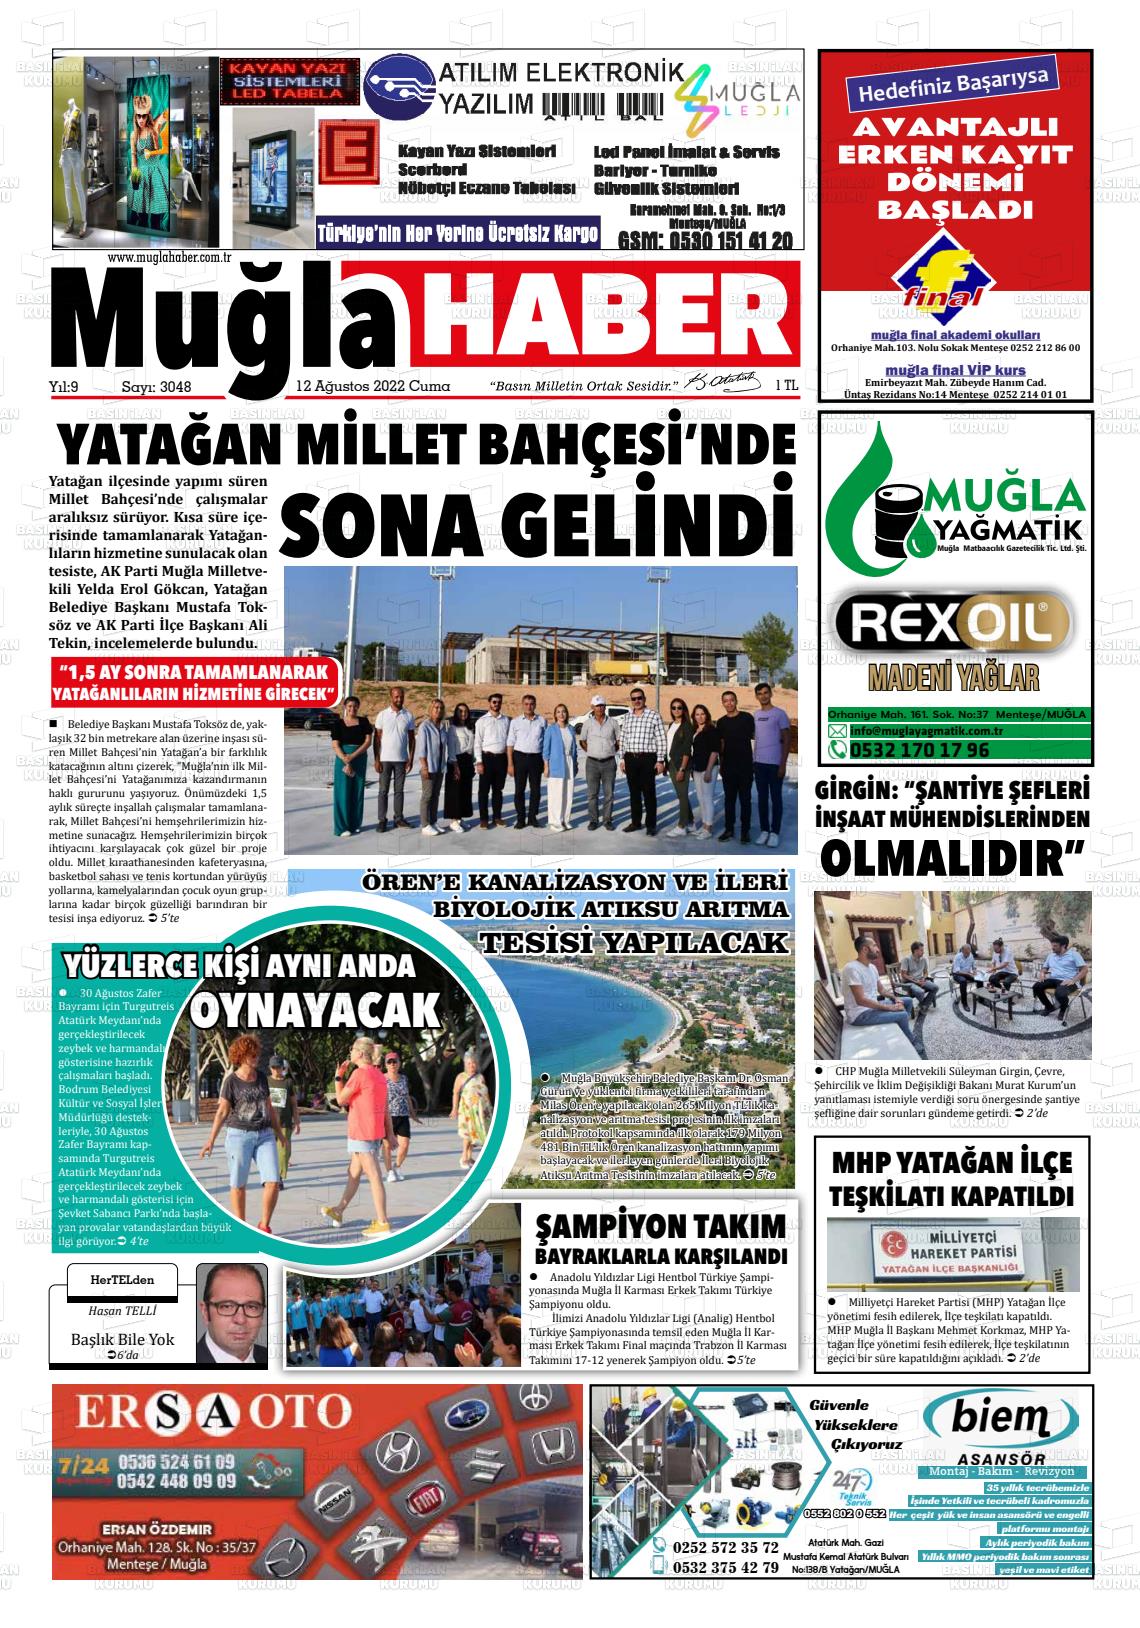 12 Ağustos 2022 Muğla Haber Gazete Manşeti